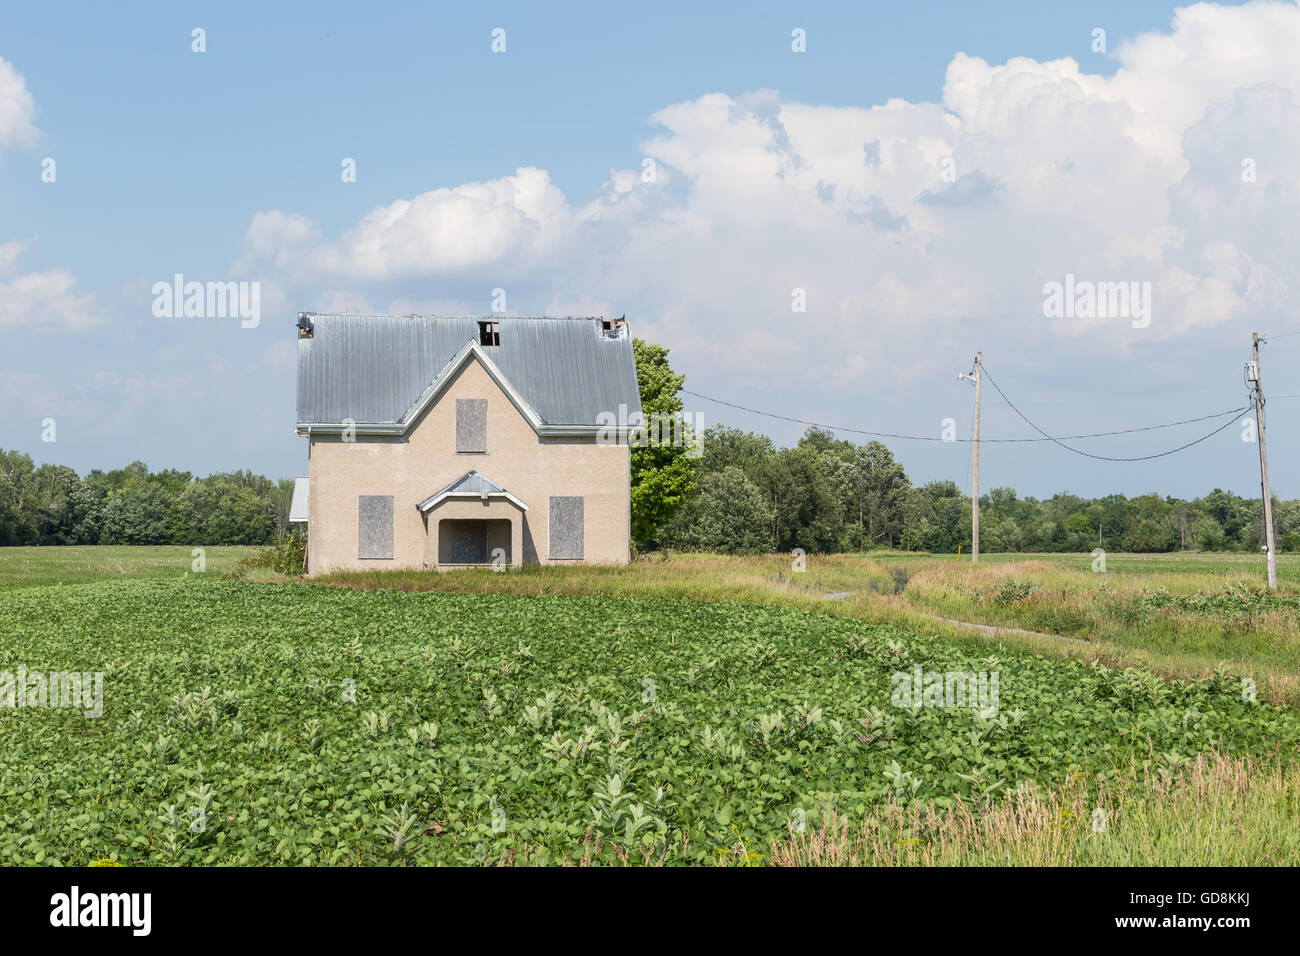 Farm house in a farmers field Stock Photo